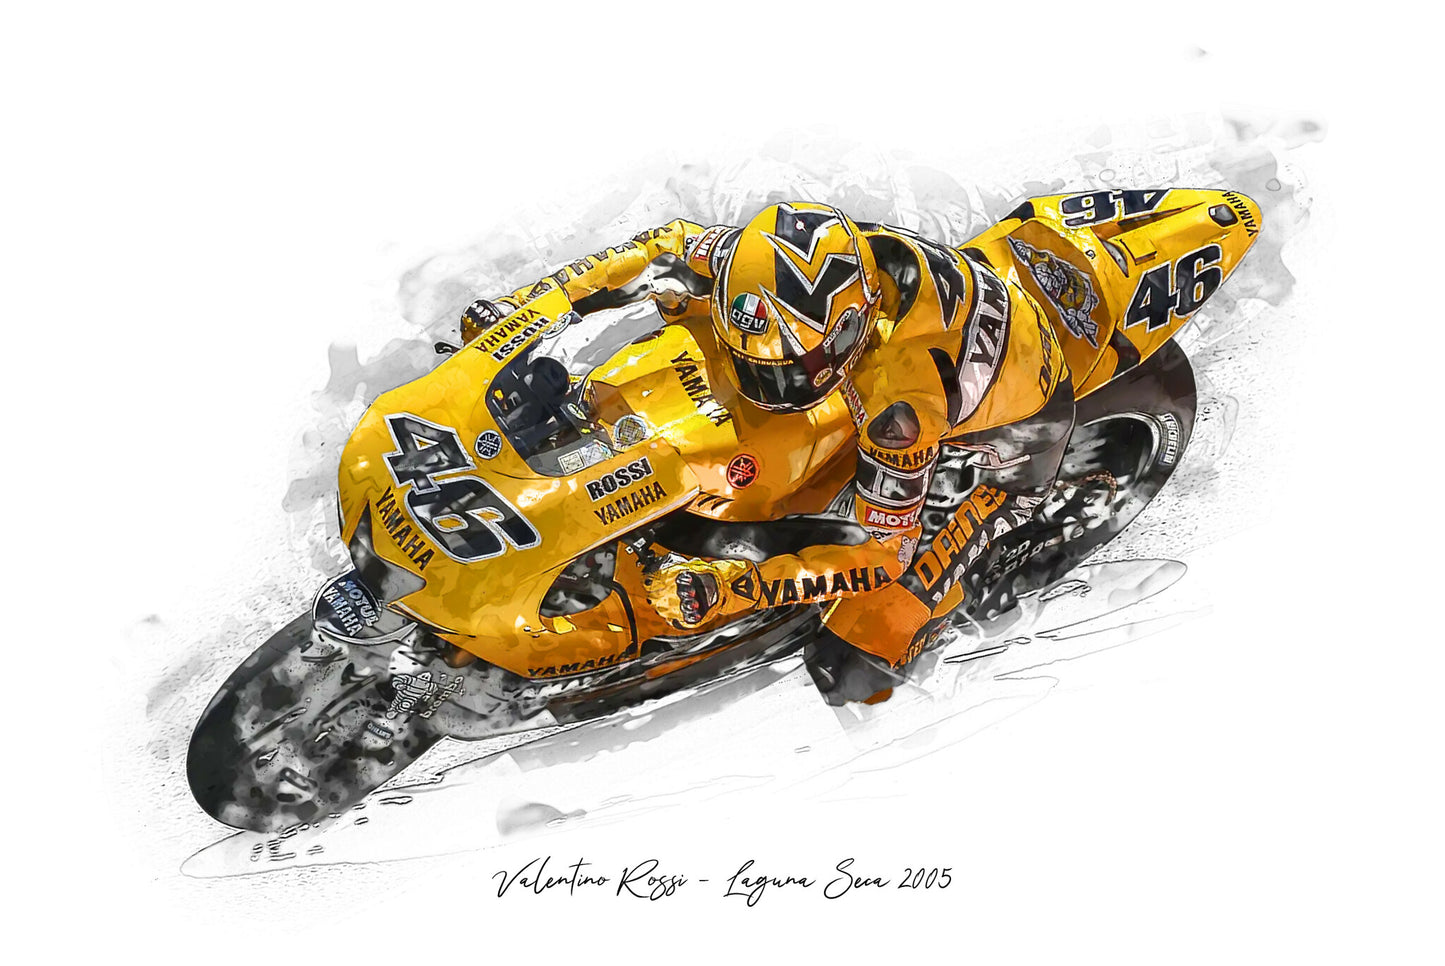 Valentino Rossi - Laguna Seca 2005 - Kunstdruck gerahmt - 40 x 30  cm